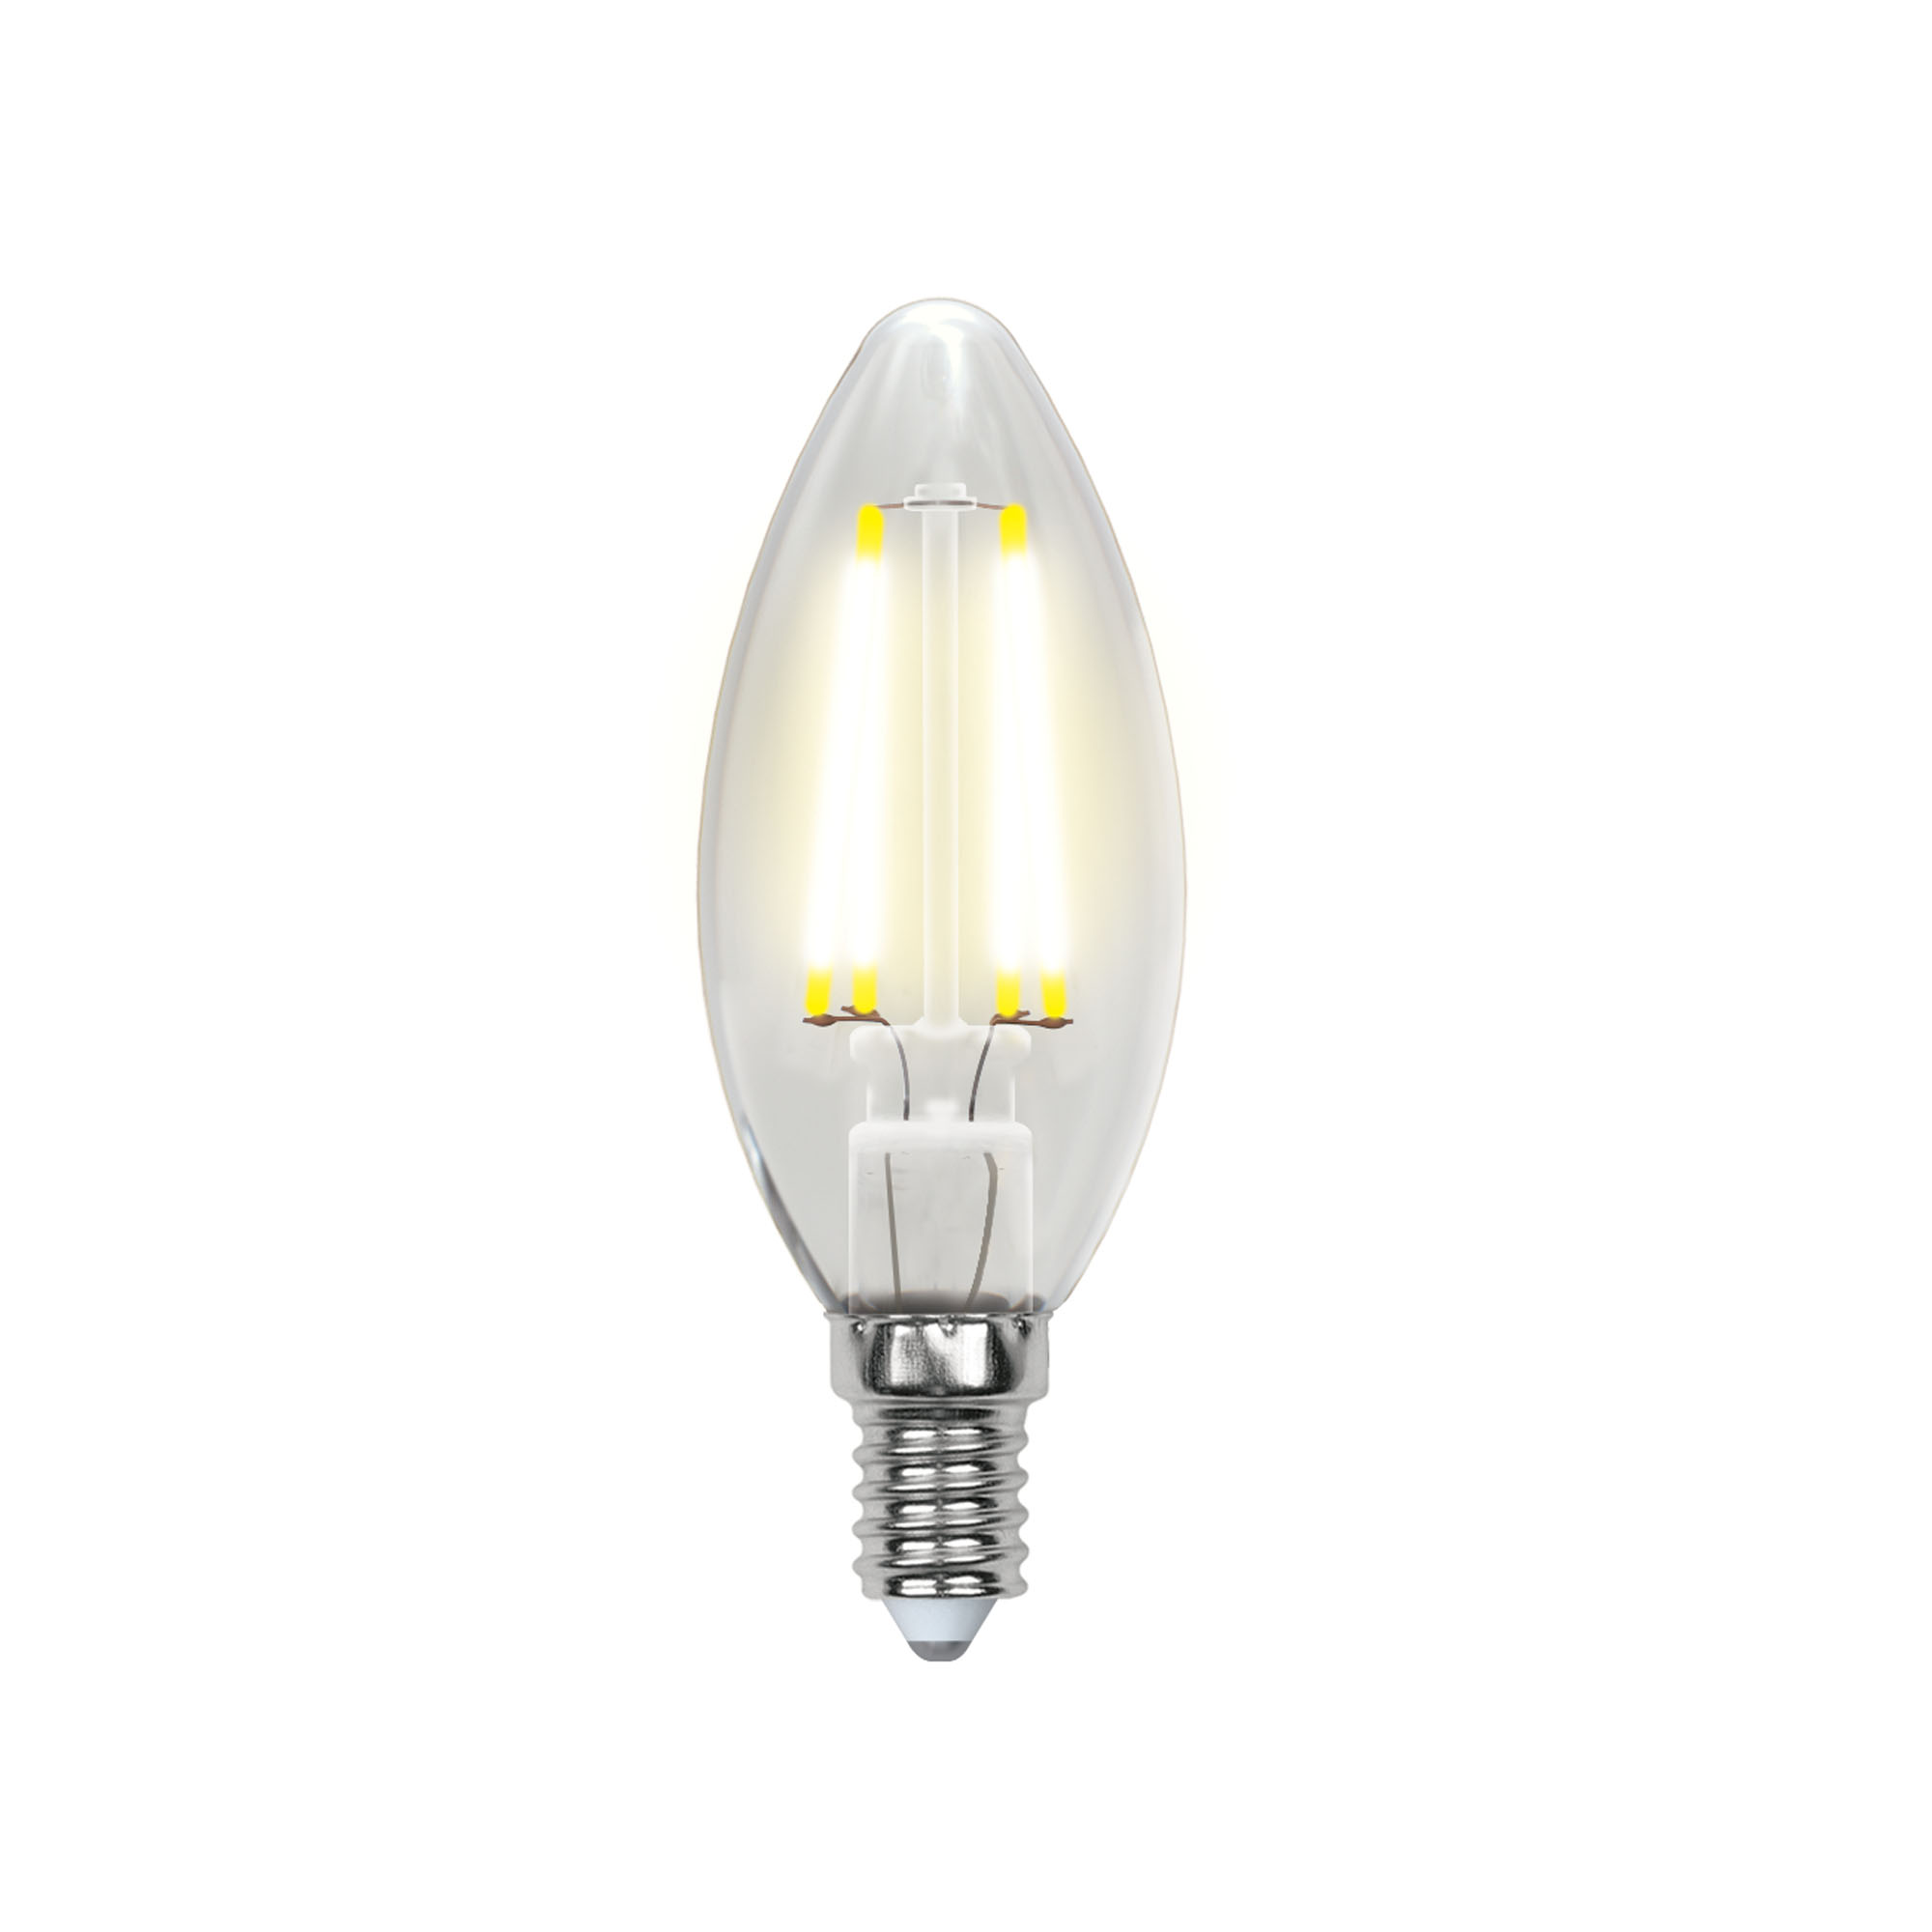 LED-C35-6W-WW-E14-CL PLS02WH Лампа светодиодная. Форма свеча. прозрачная колба. Материал корпуса пластик. Цвет свечения теплый белый. Серия Sky. Упаковка картон. ТМ Uniel